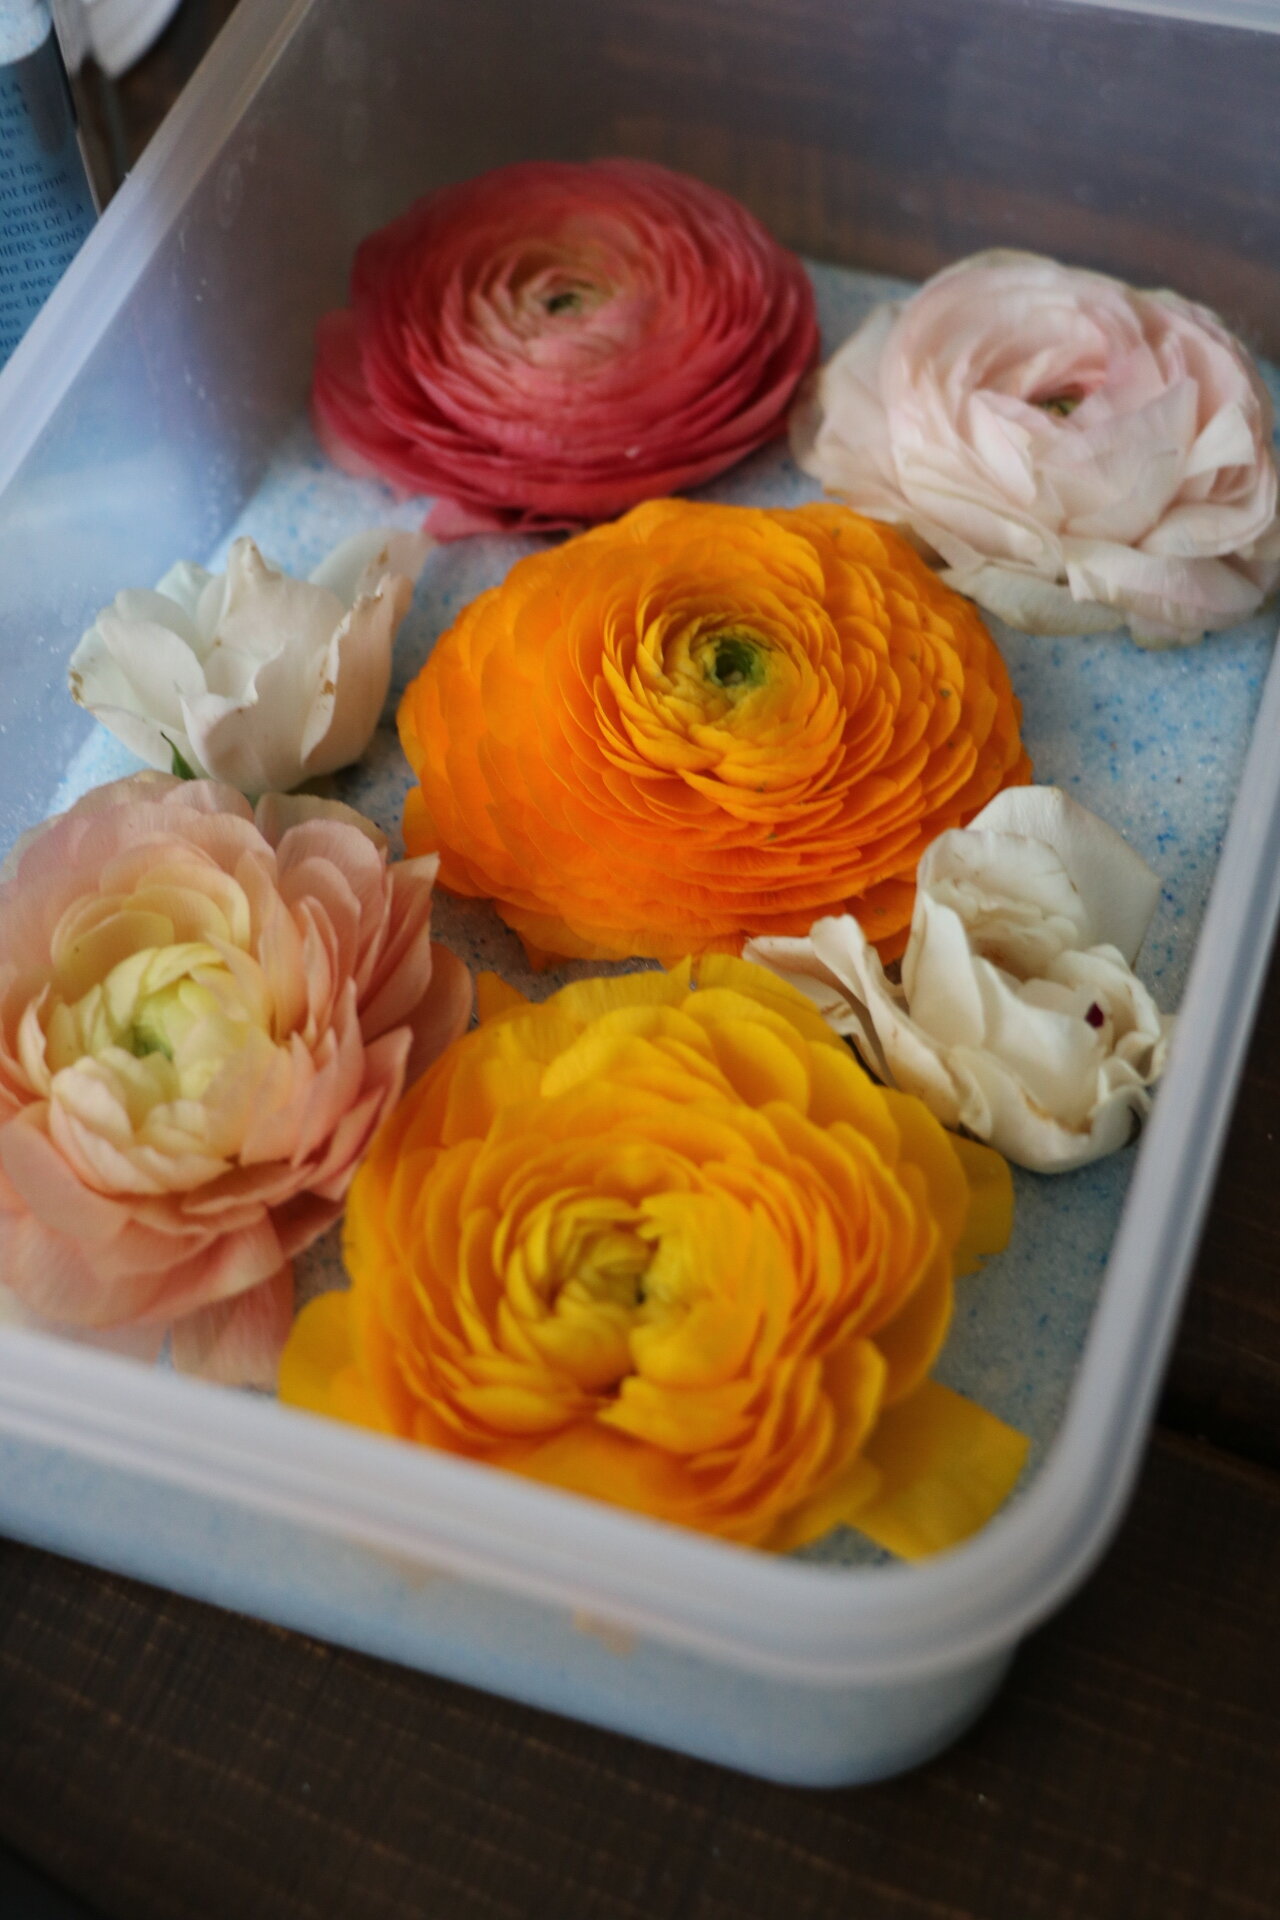 How to Preserve Flowers & Wedding Bouquet: 8 Methods